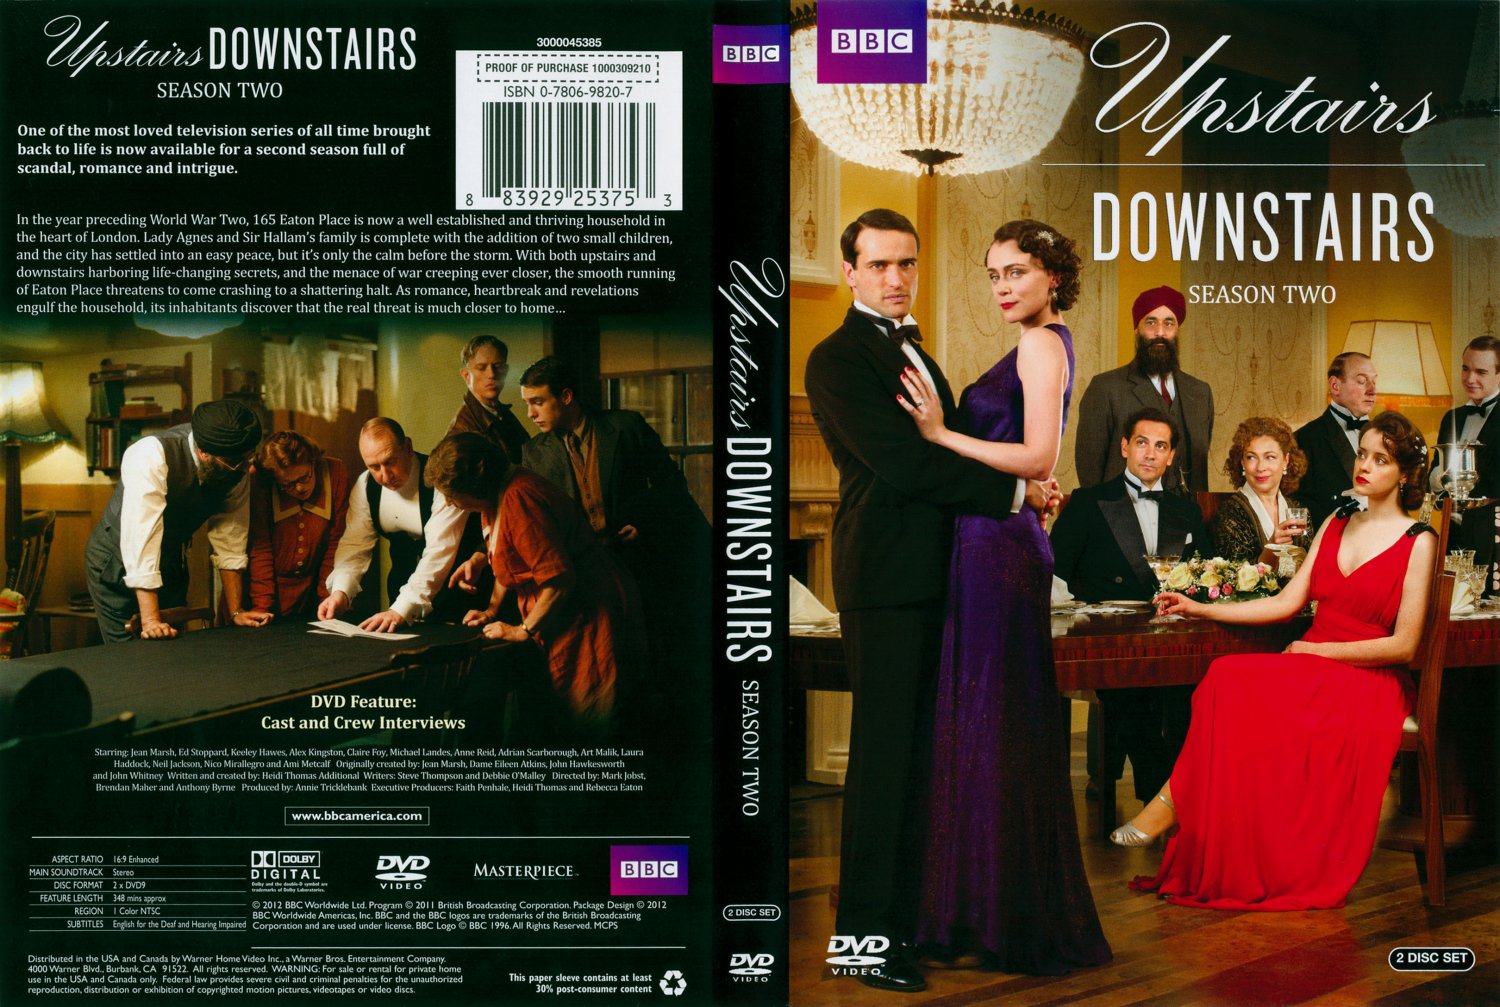 Upstairs Downstairs Season 2 - TV DVD Scanned Covers - Upstairs